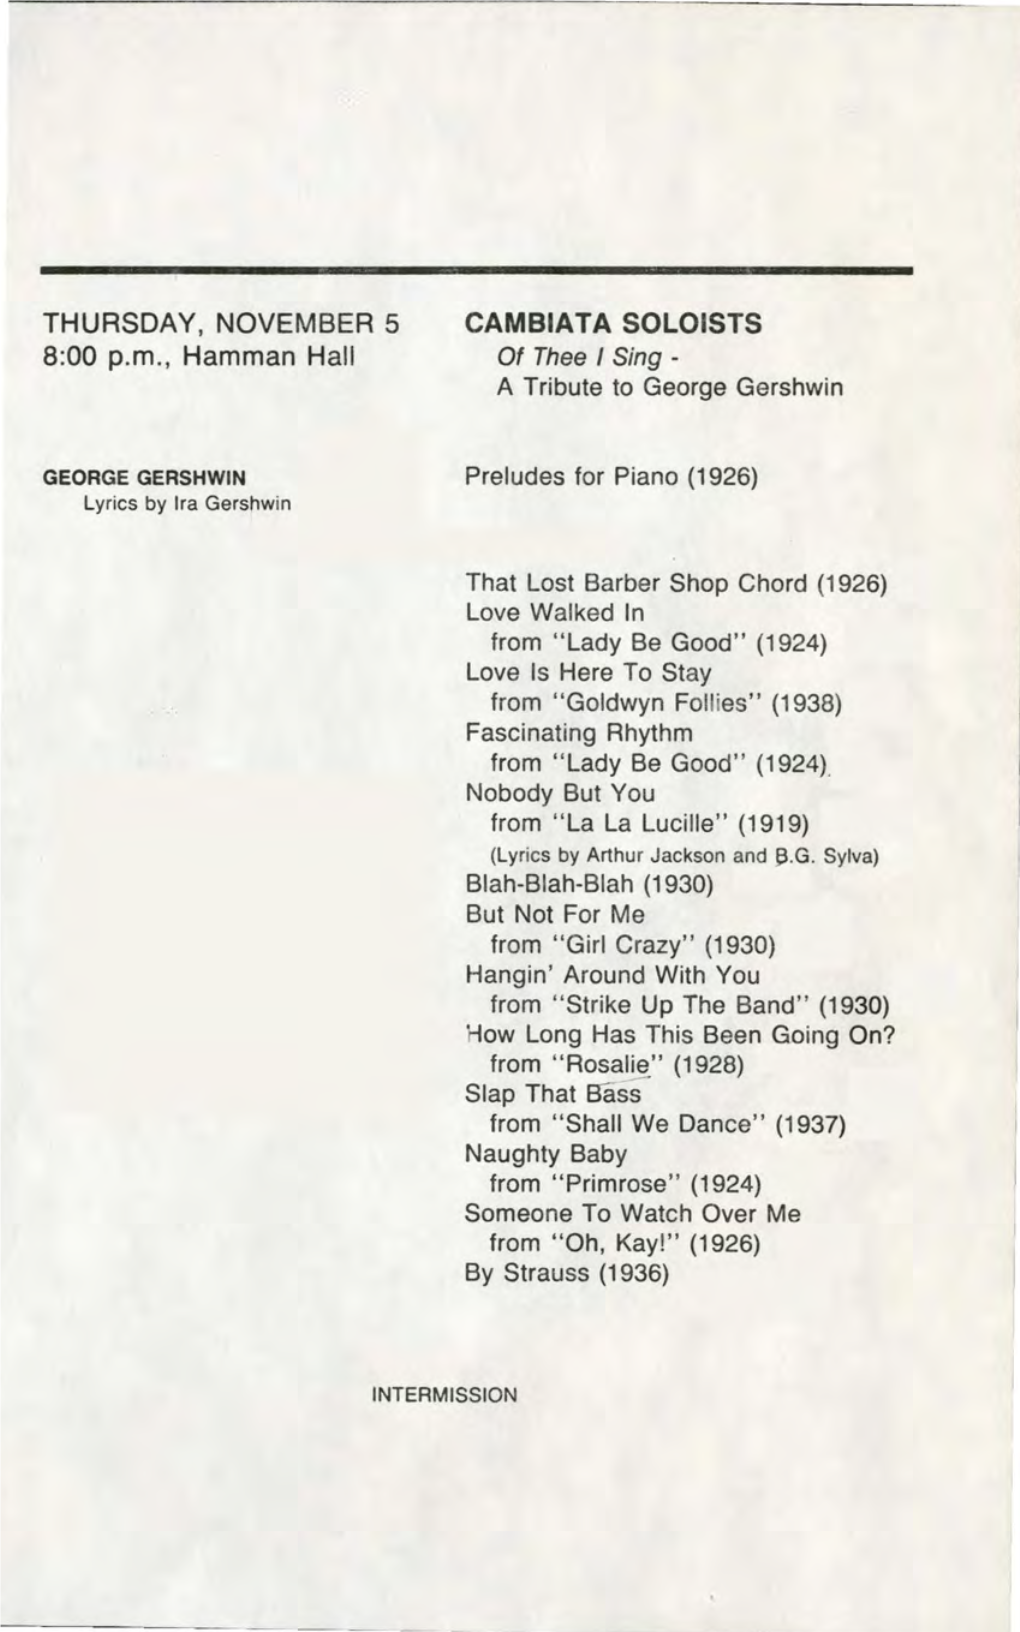 Cambiata Soloists, Thursday, November 5, 1987, 8:00 P.M